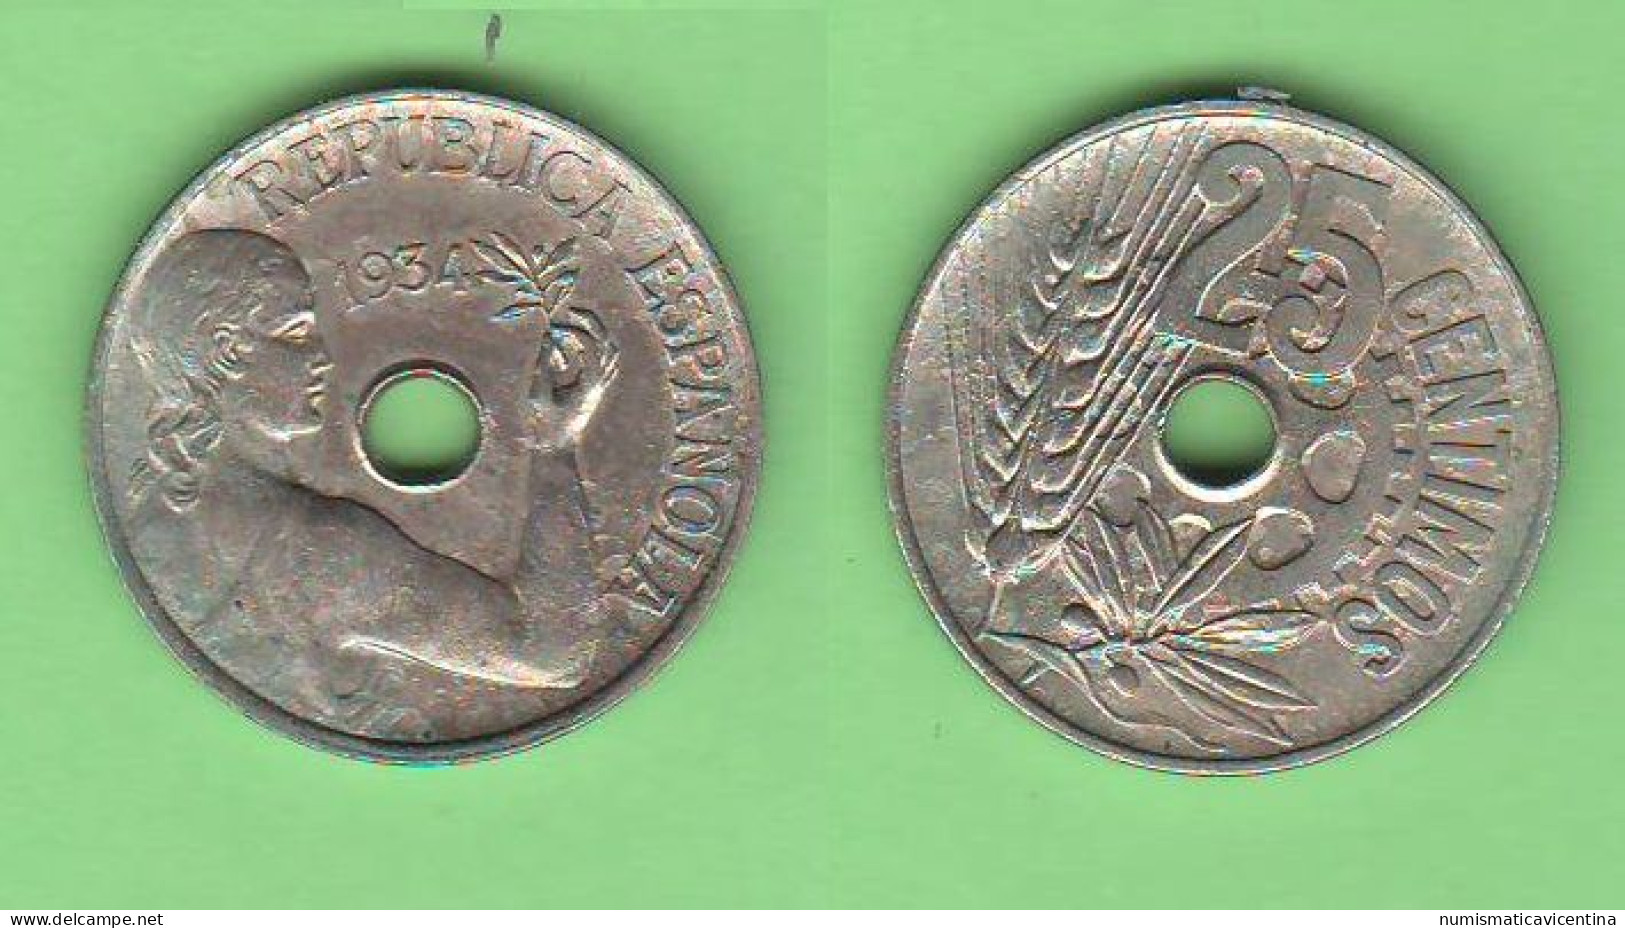 Spain Spagna 25 Centimos 1934 Nickel Typological Coin  K 751 - 25 Centiemos